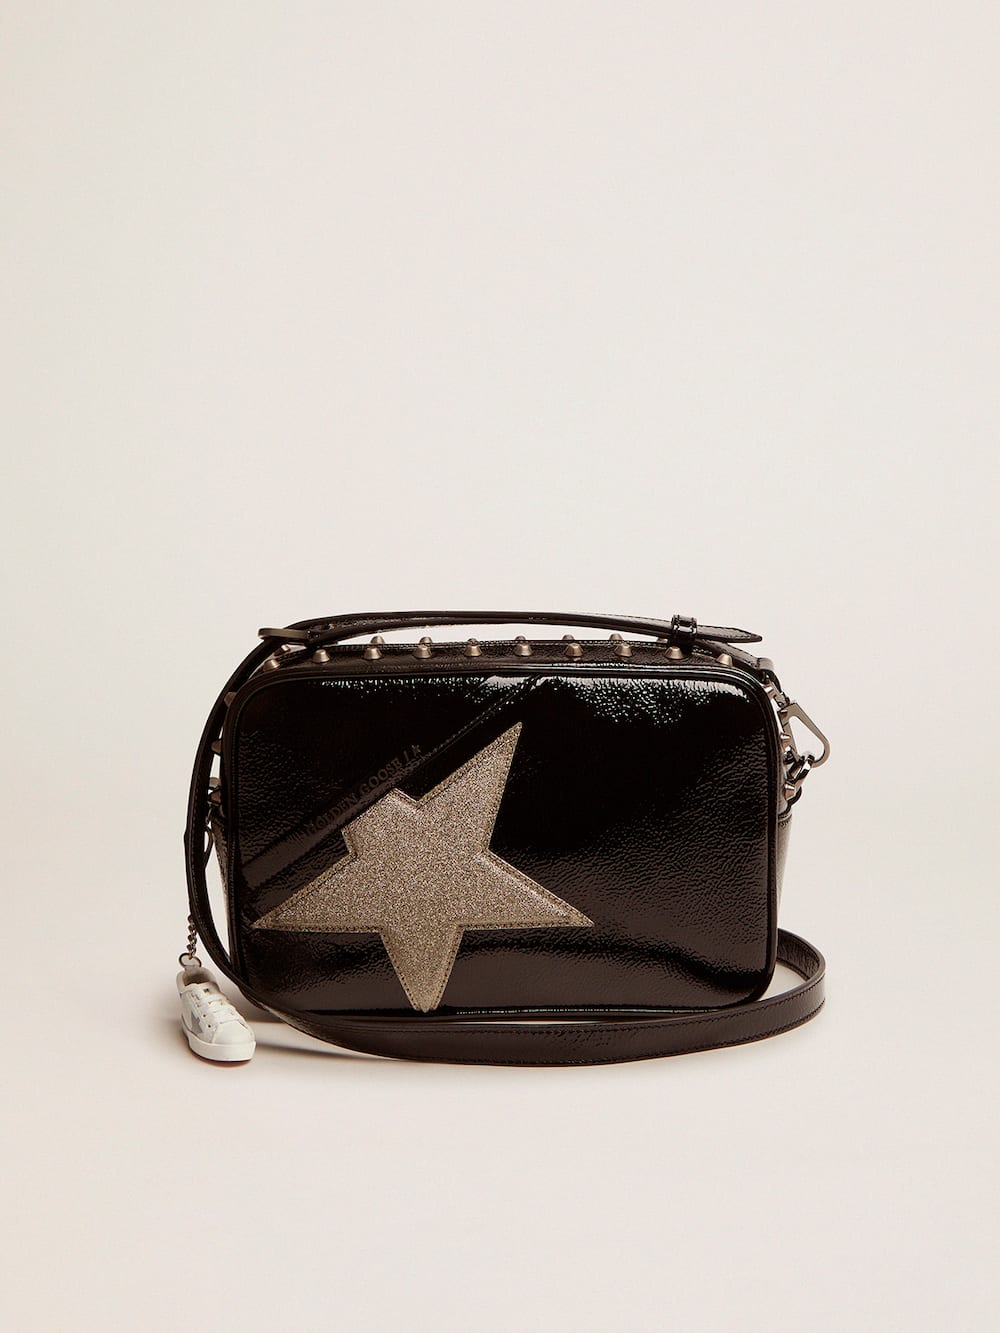 Golden Goose - Borsa Star Bag in pelle nera verniciata e stella in glitter argento in 